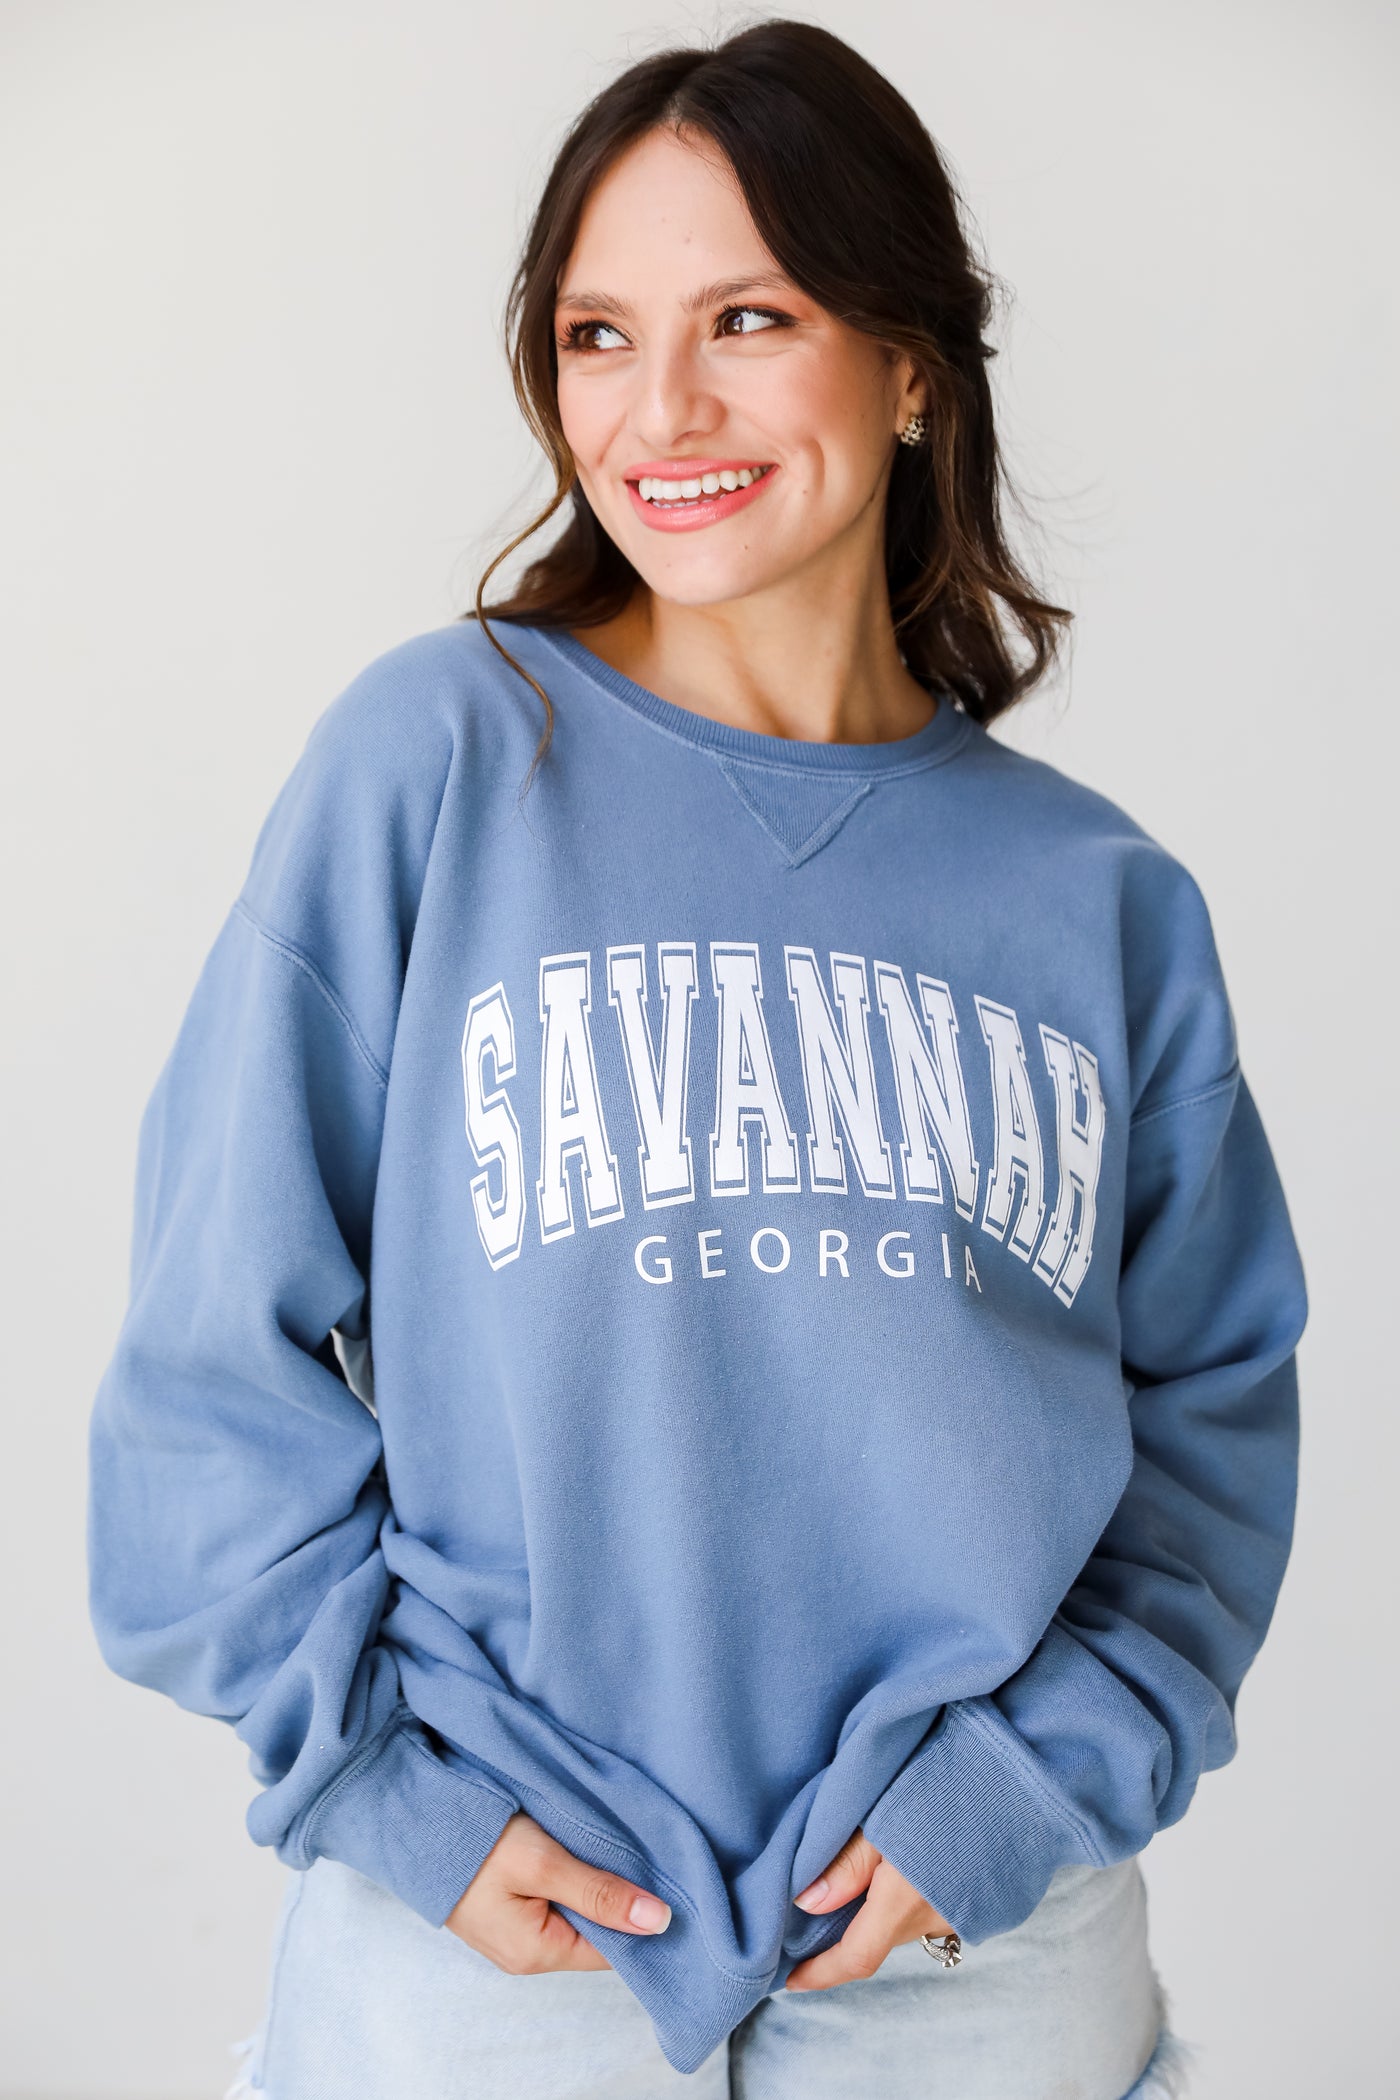 Blue Savannah Georgia Pullover. Graphic Sweatshirt. Oversized Comfy Sweatshirt.